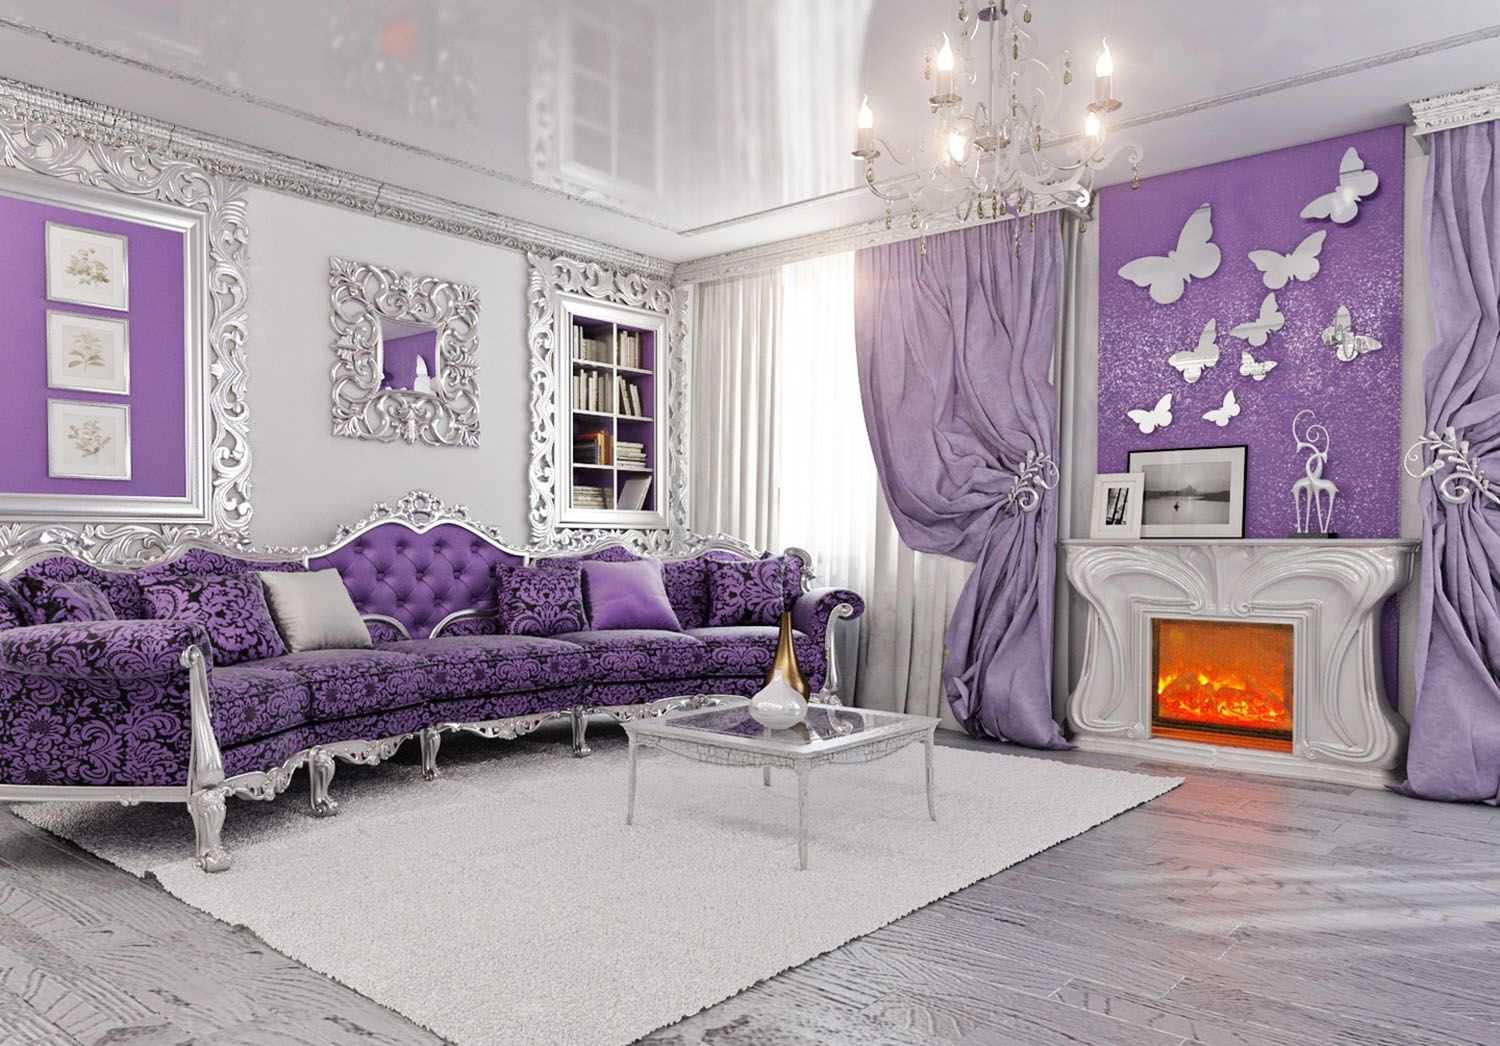 light purple sofa in the decor of the bedroom